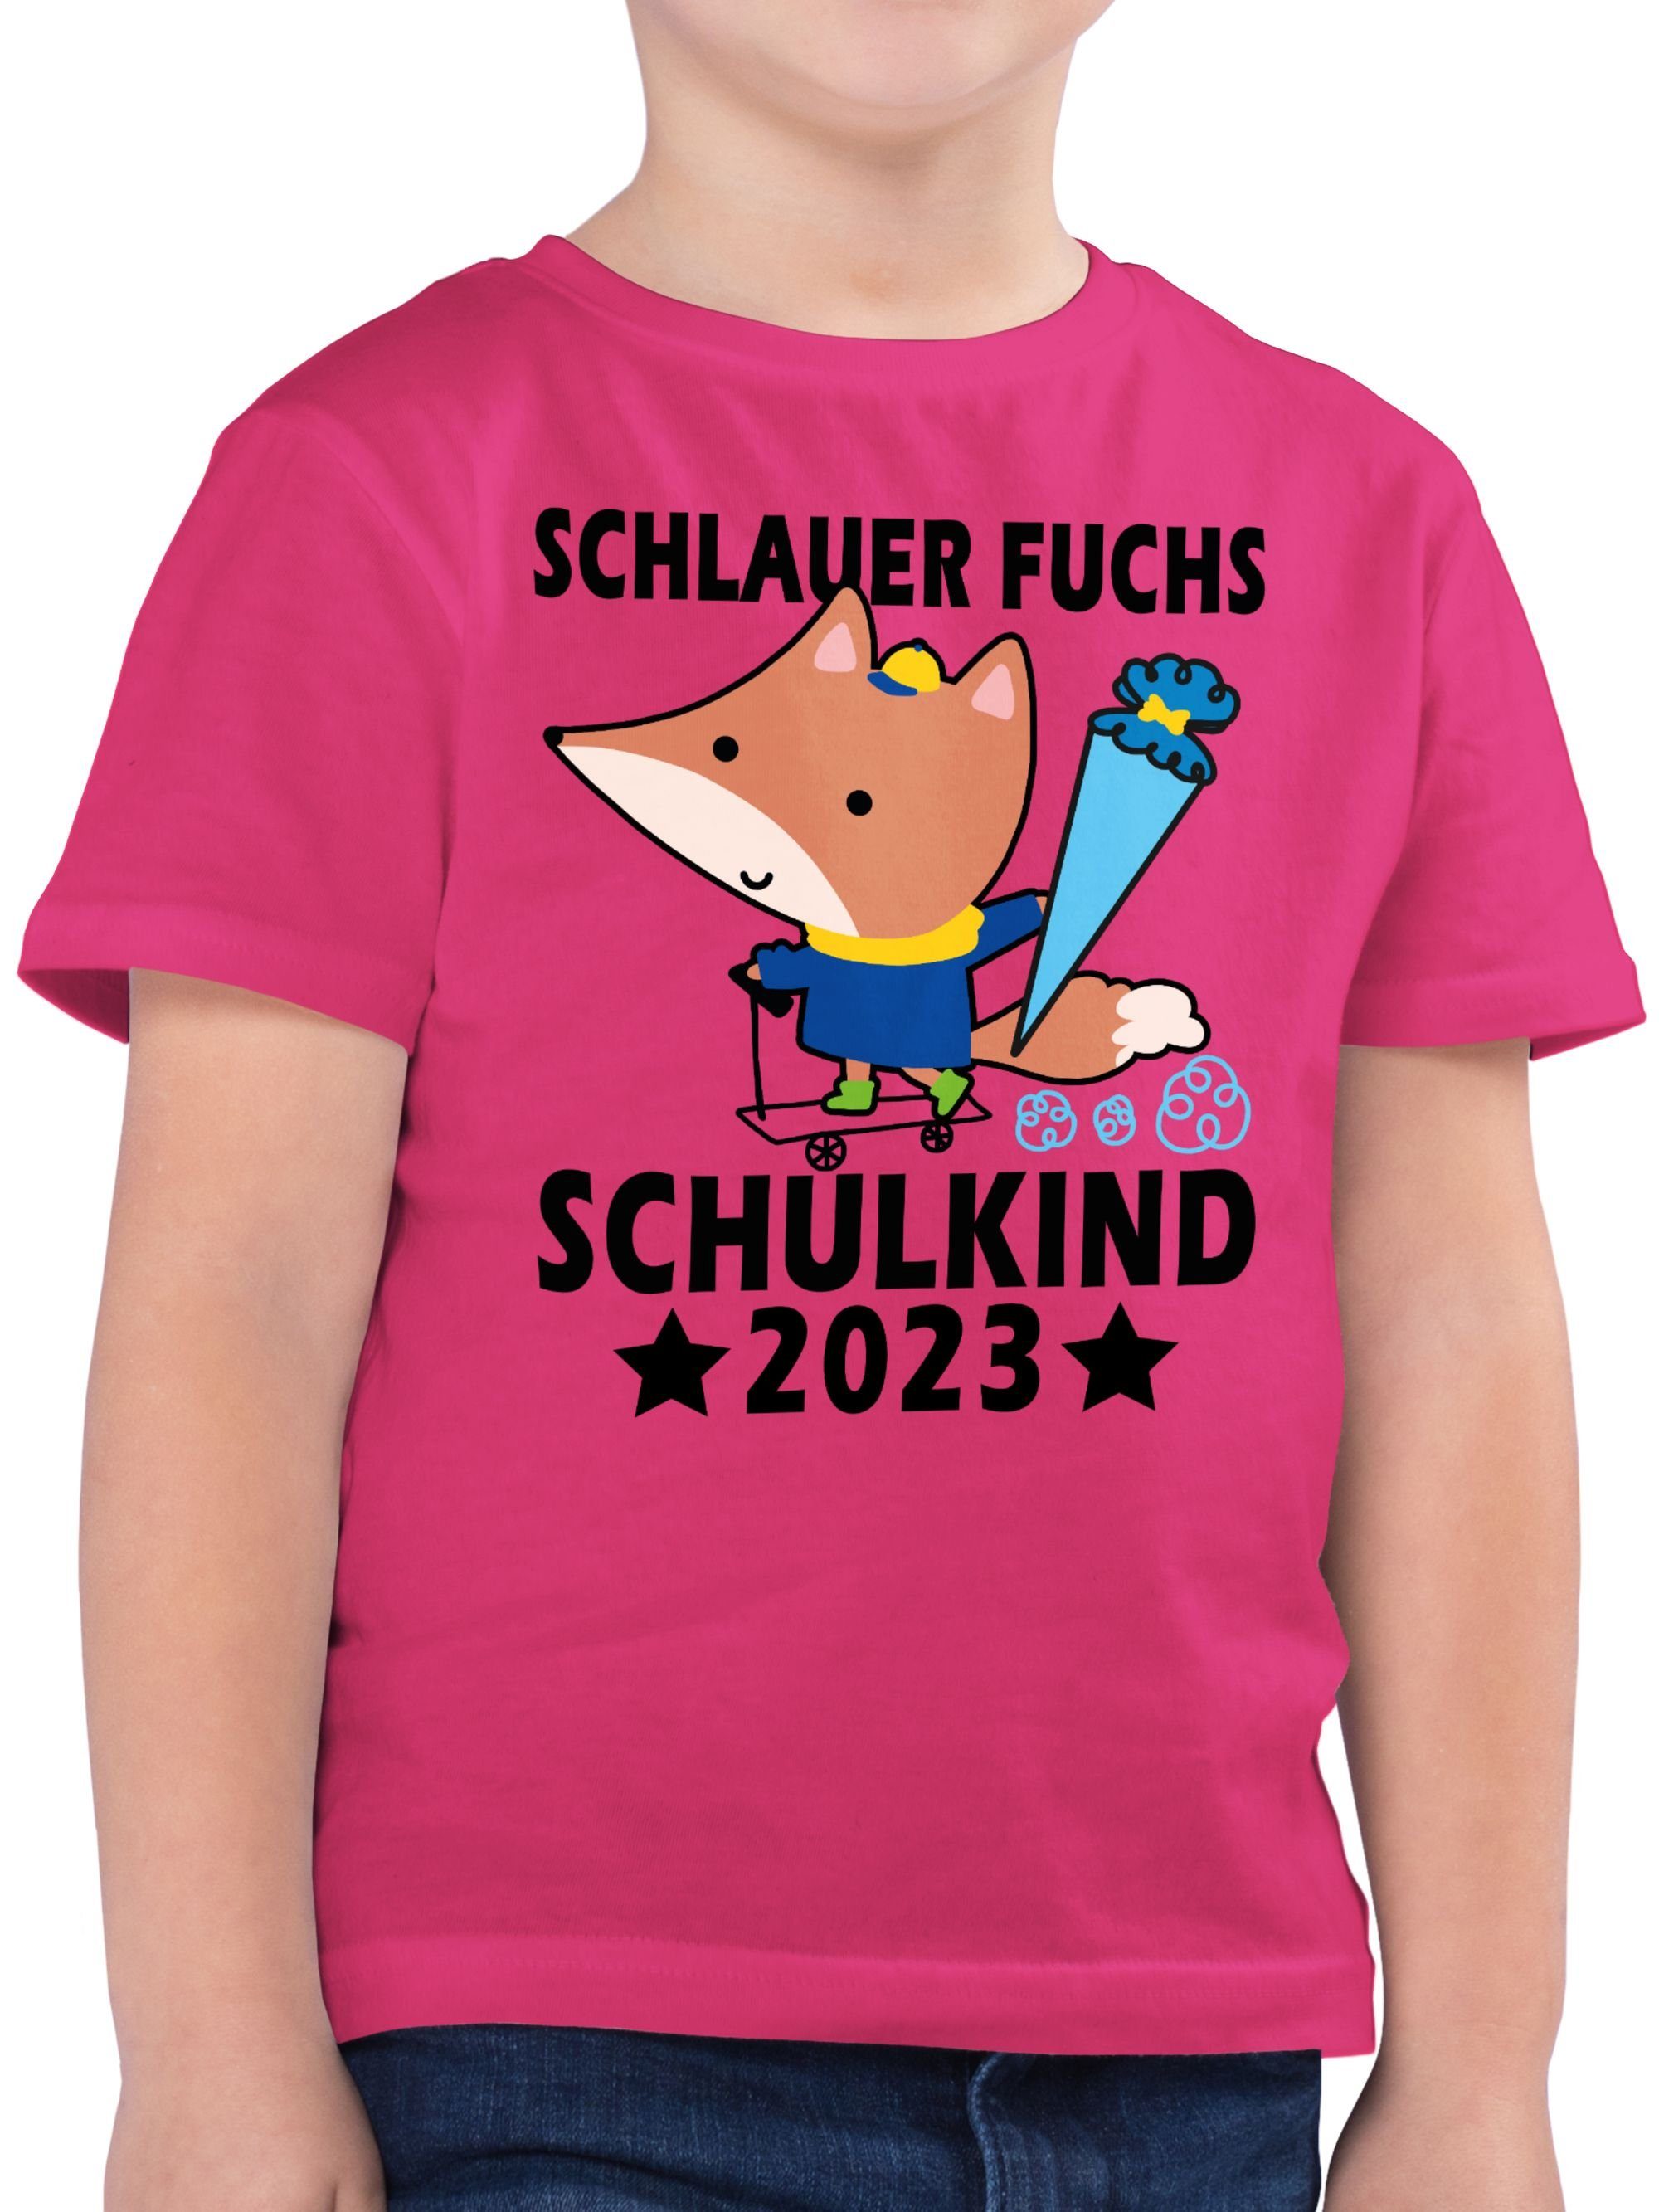 Fuchs - Schulanfang 2023 schwarz Shirtracer Junge Fuchsia Schulkind Einschulung Schlauer T-Shirt 03 Geschenke